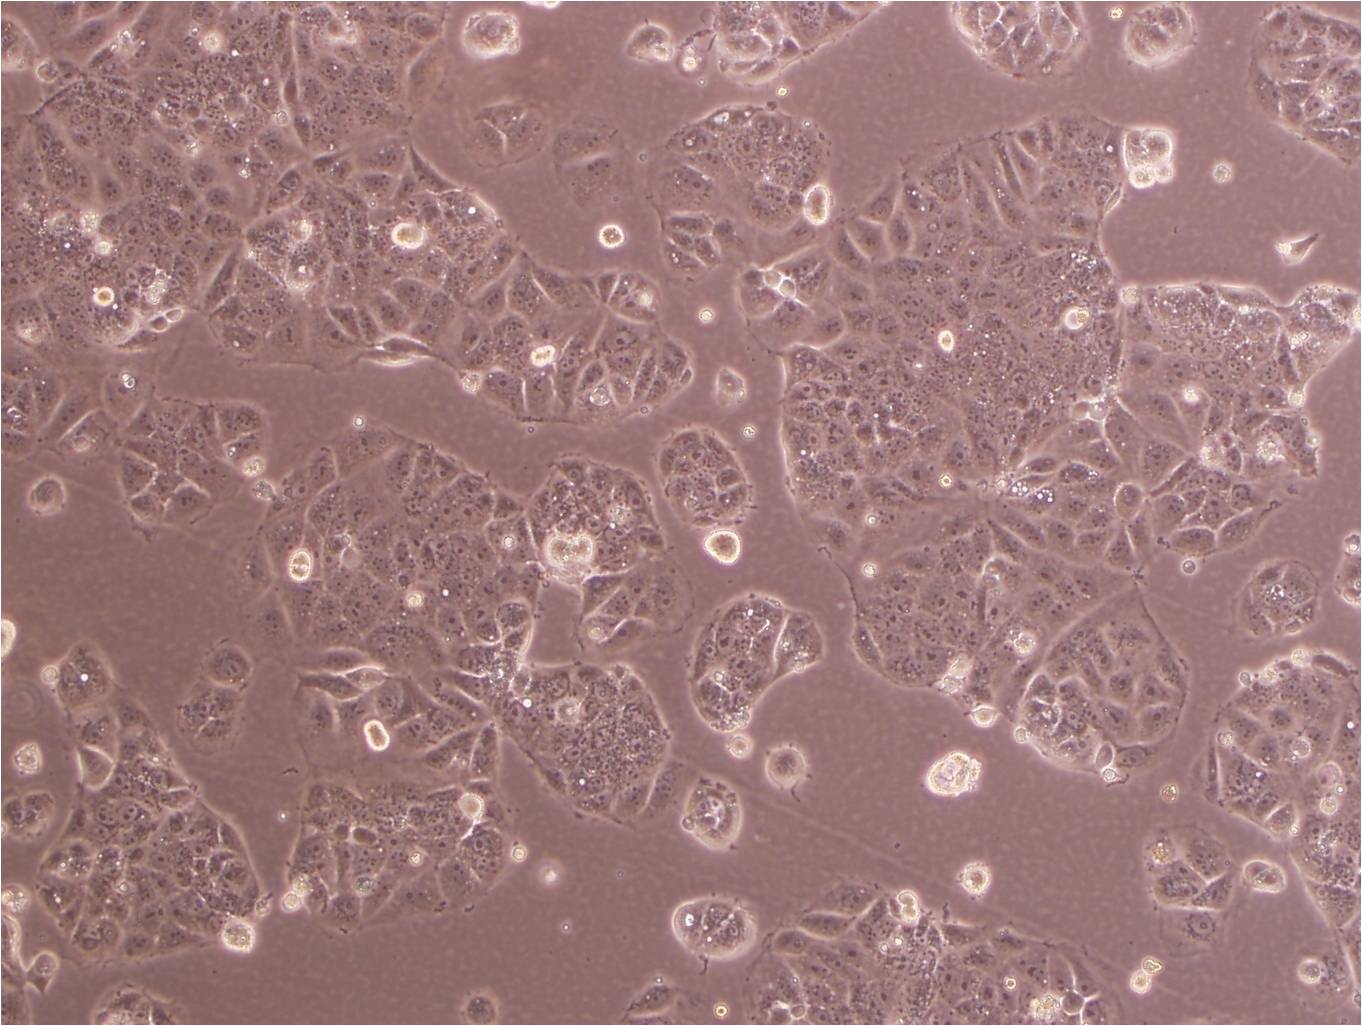 RA-FLSs fibroblast cells类风湿关节炎成纤维样滑膜细胞系